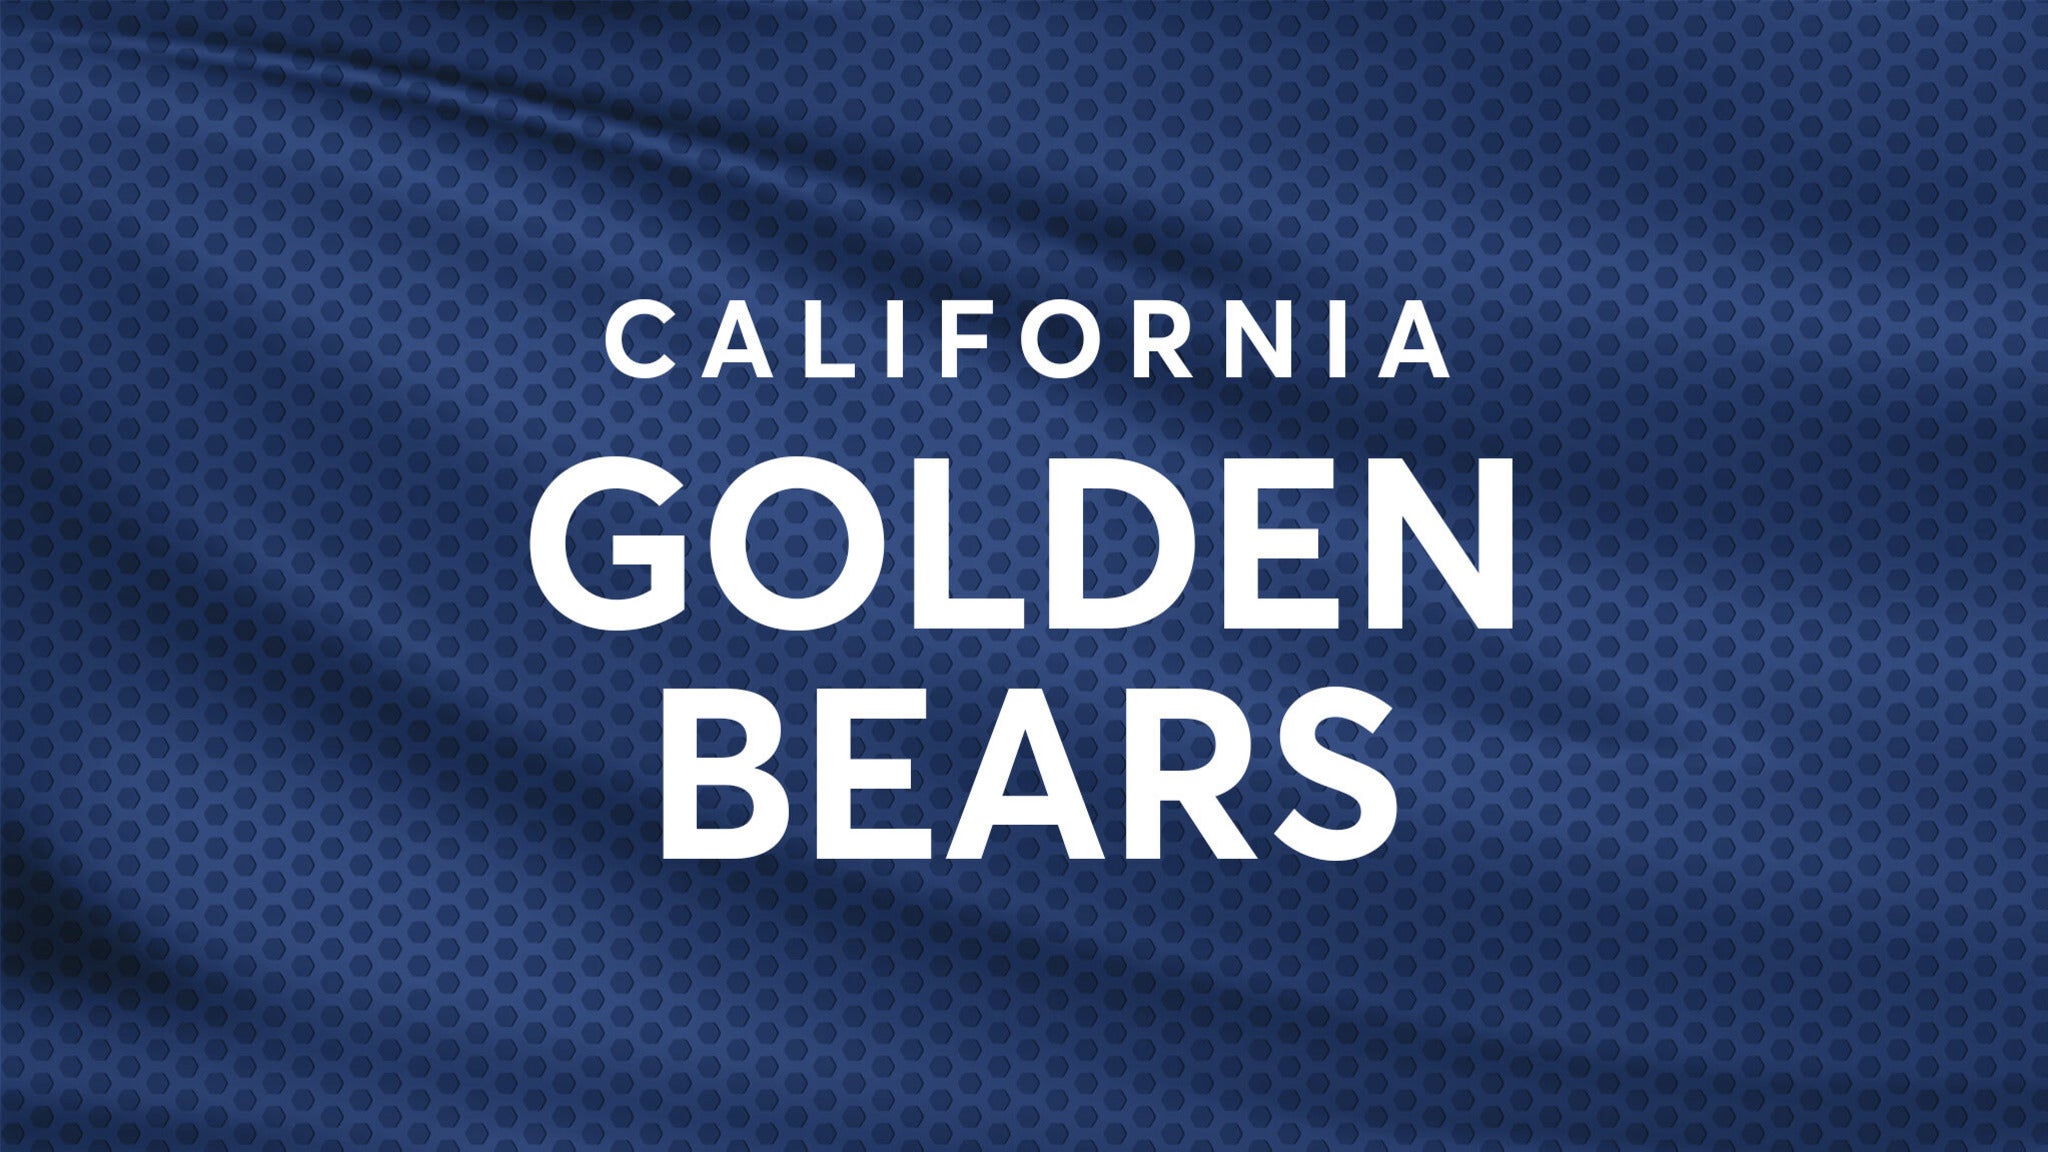 California Golden Bears Womens Basketball vs. USC Trojans Womens Basketball